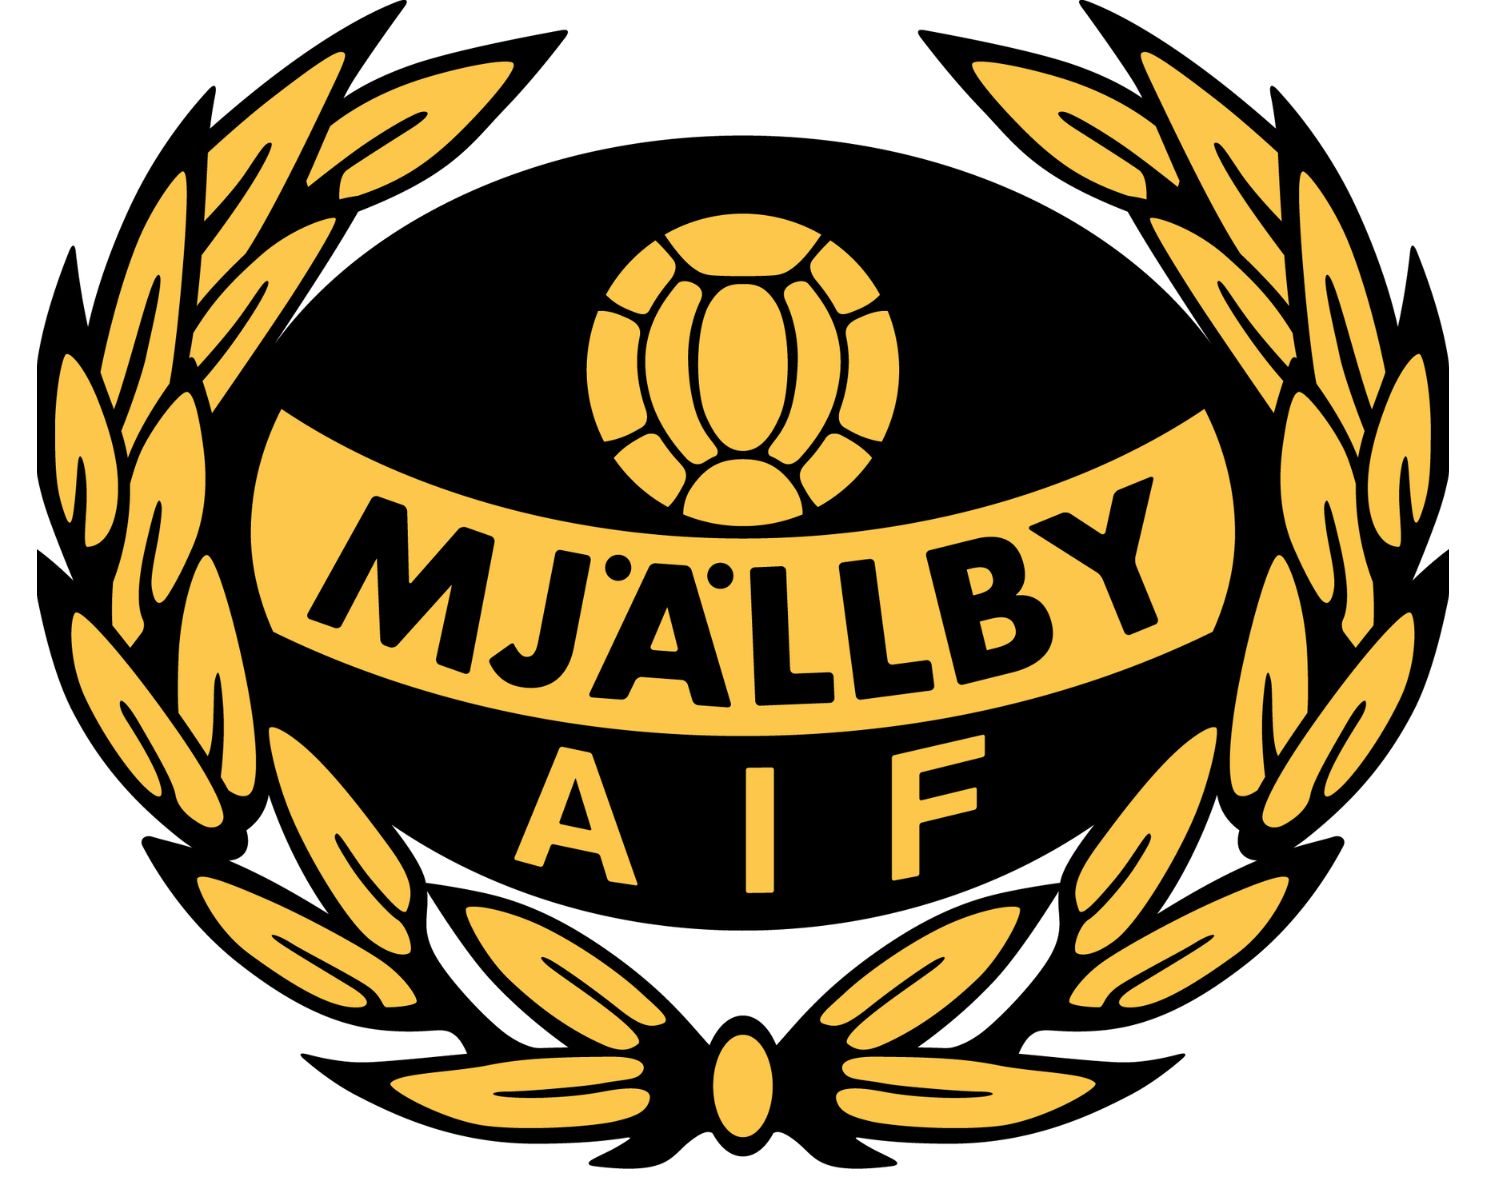 mjallby-aif-18-football-club-facts